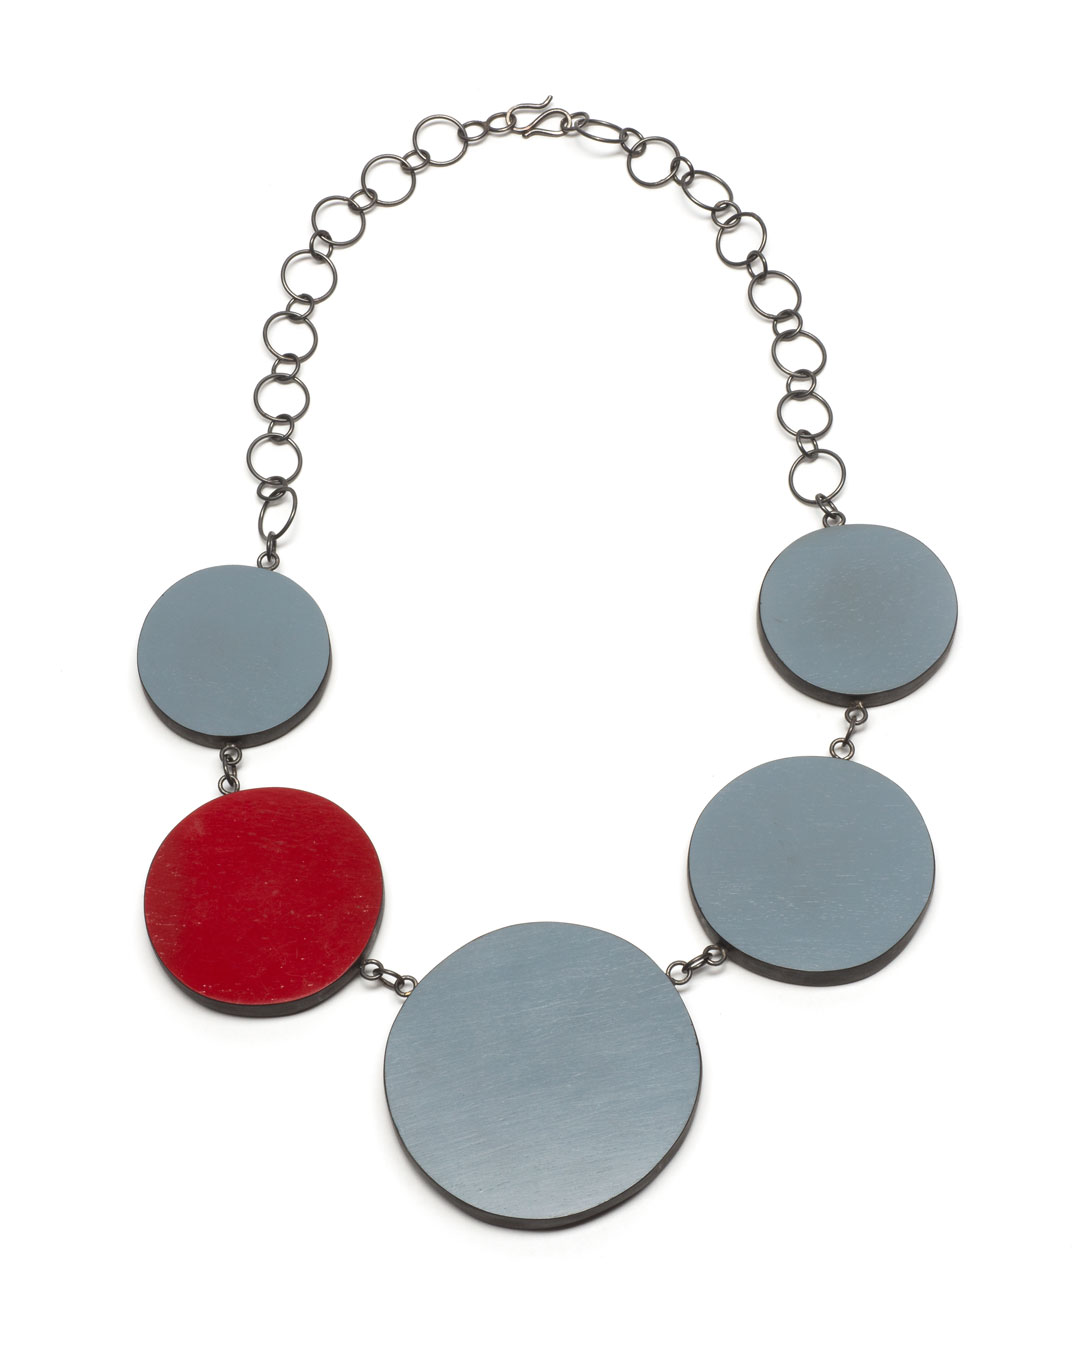 Mareen Alburg Duncker, Mikado Red II, 2018, necklace; ebony, silver, lacquer, thread,  300 x 150 x 7 mm, €1950